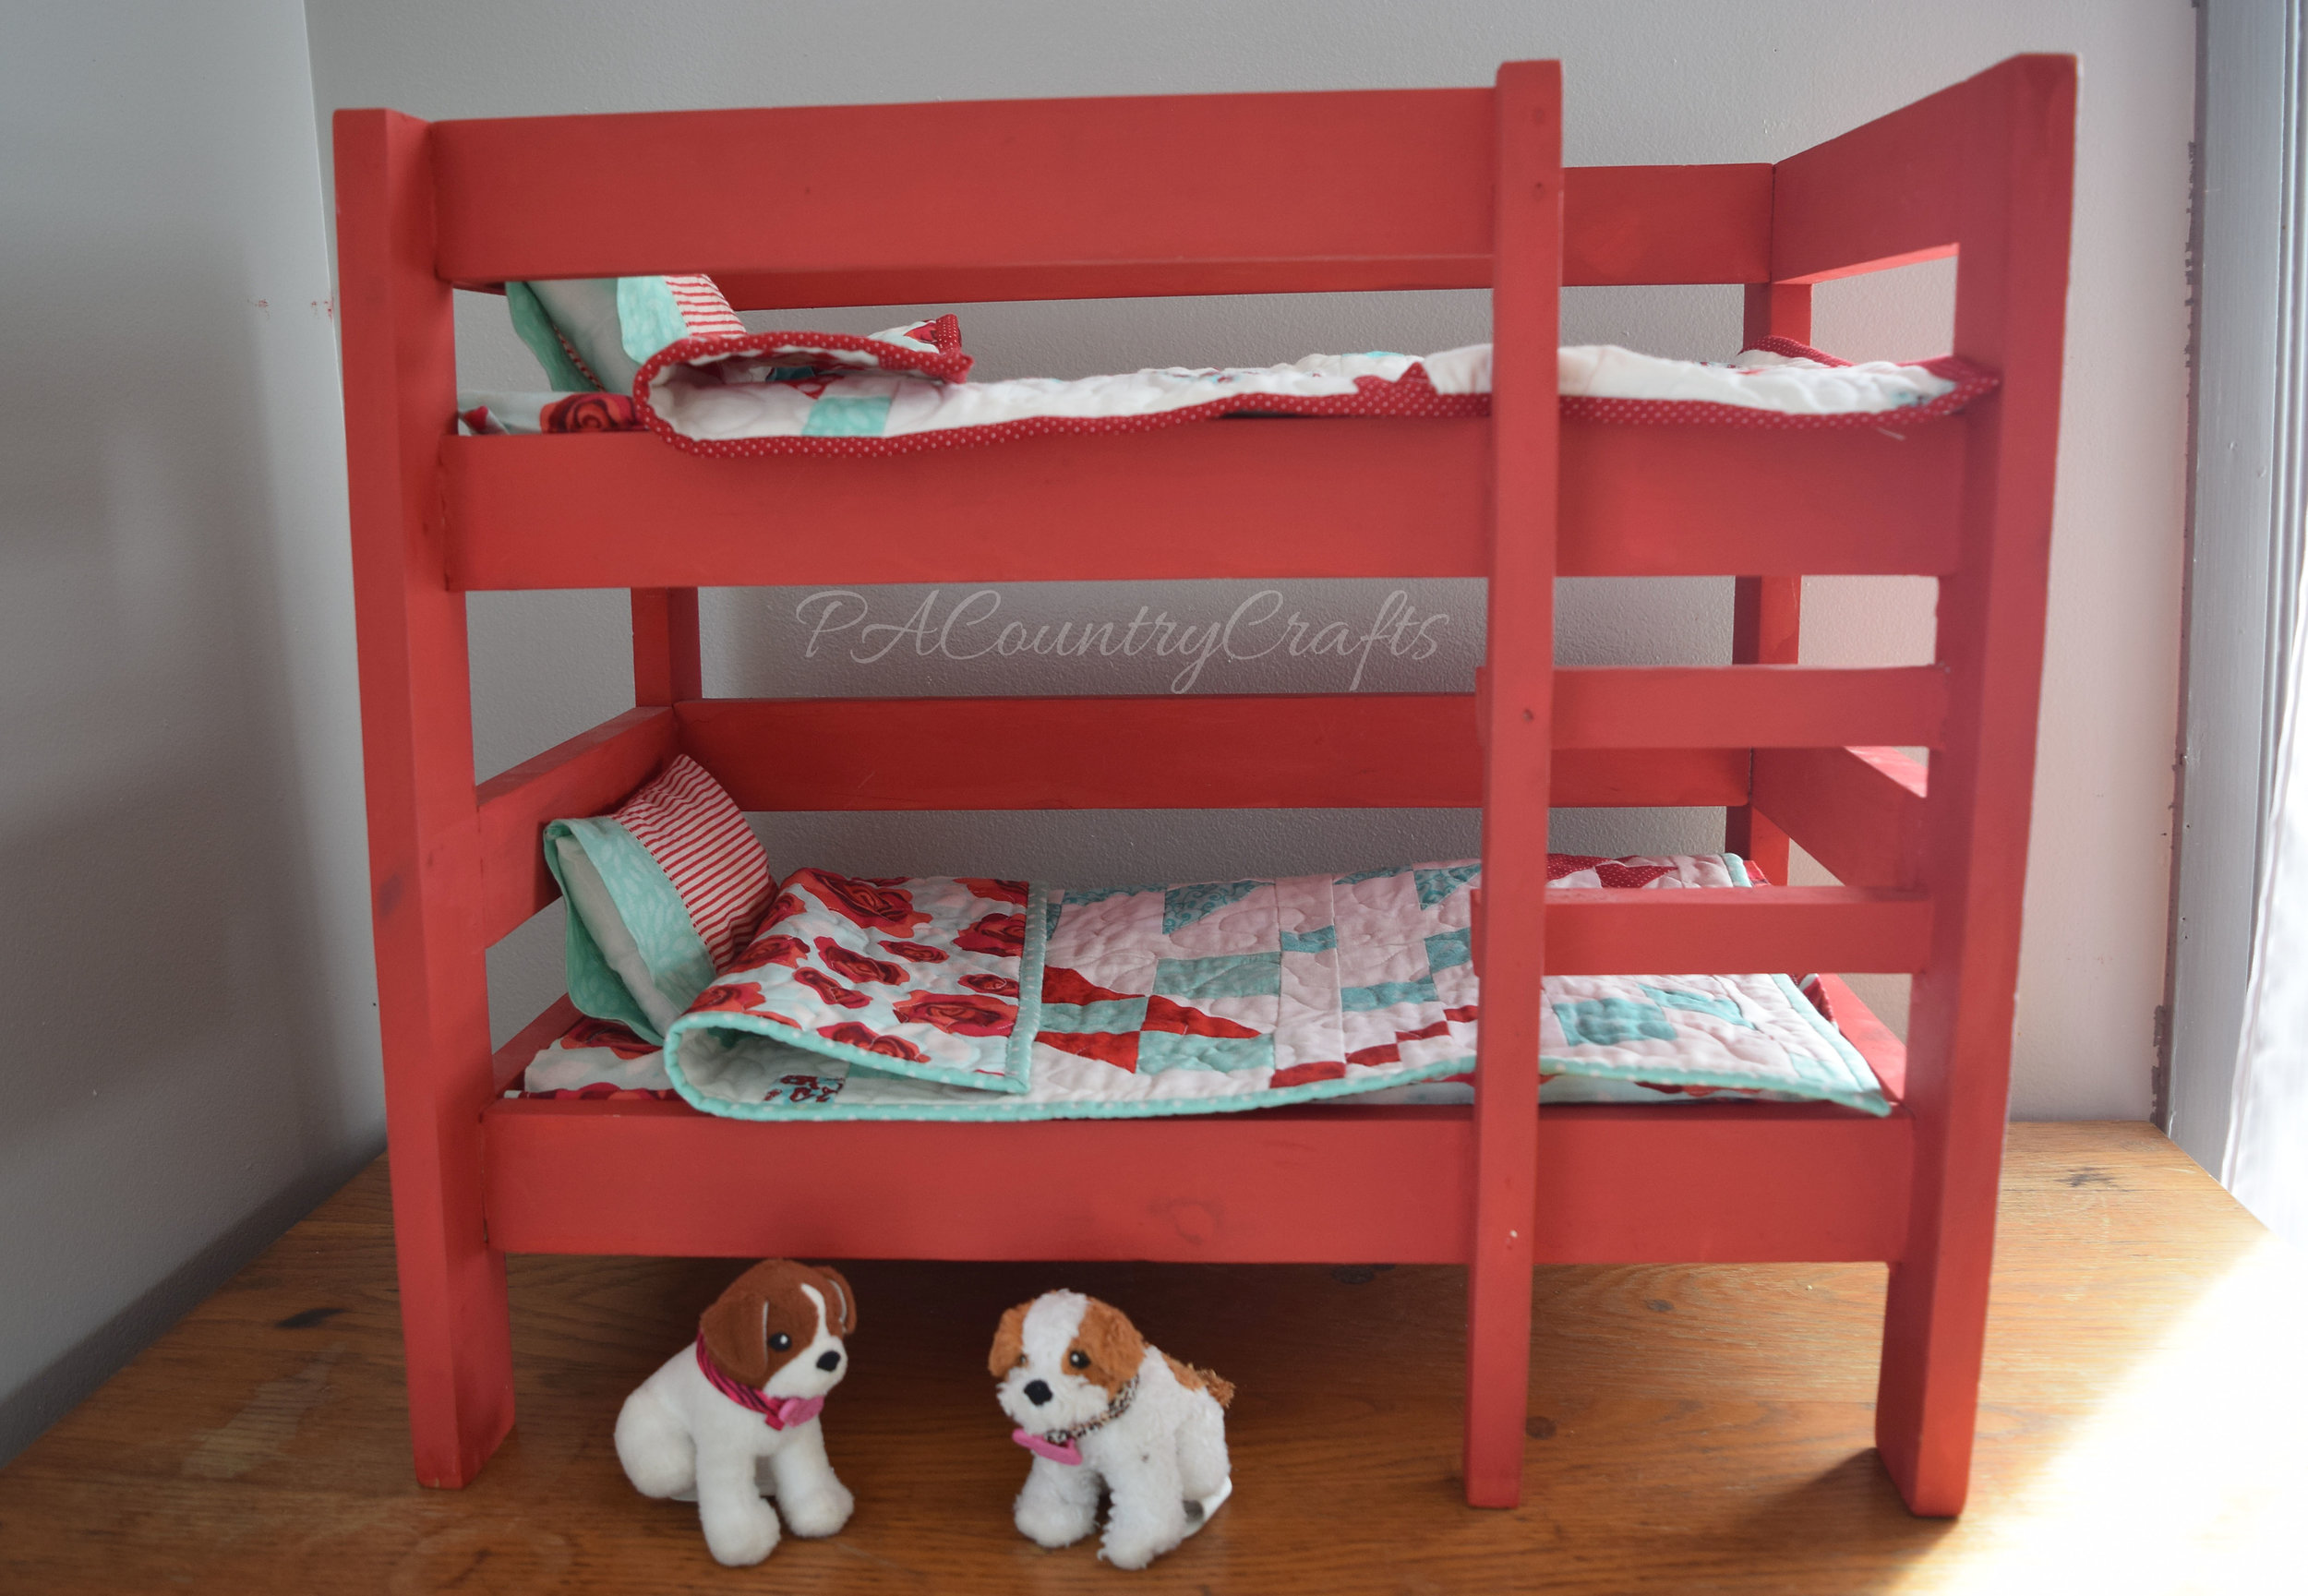 Diy Doll Bunk Beds Pacountrycrafts, Diy Baby Doll Bunk Bed